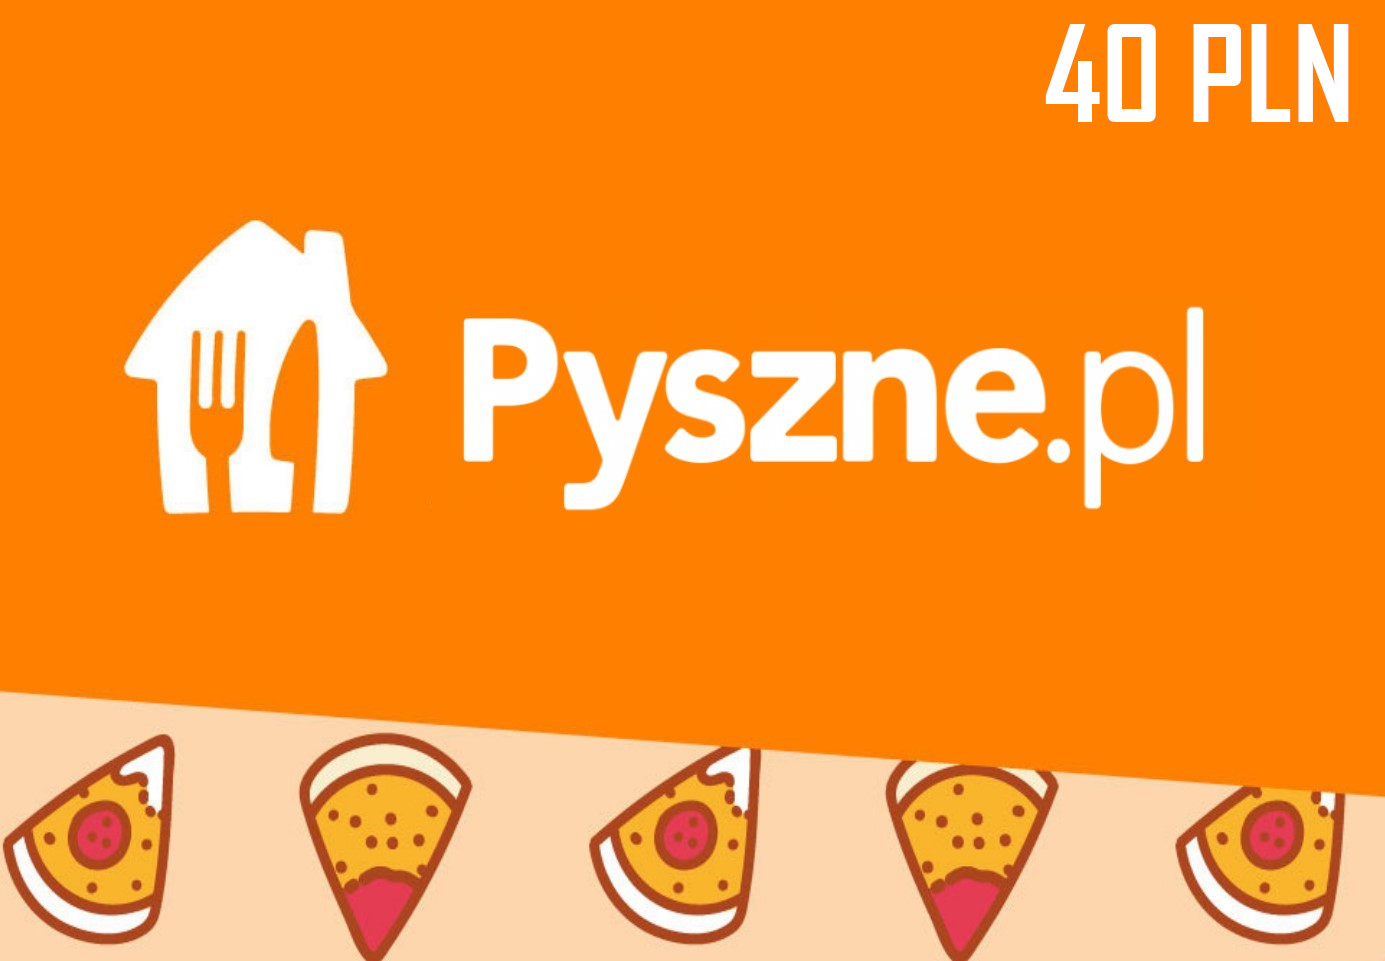 [$ 11.82] Pyszne.pl 40 PLN Gift Card PL